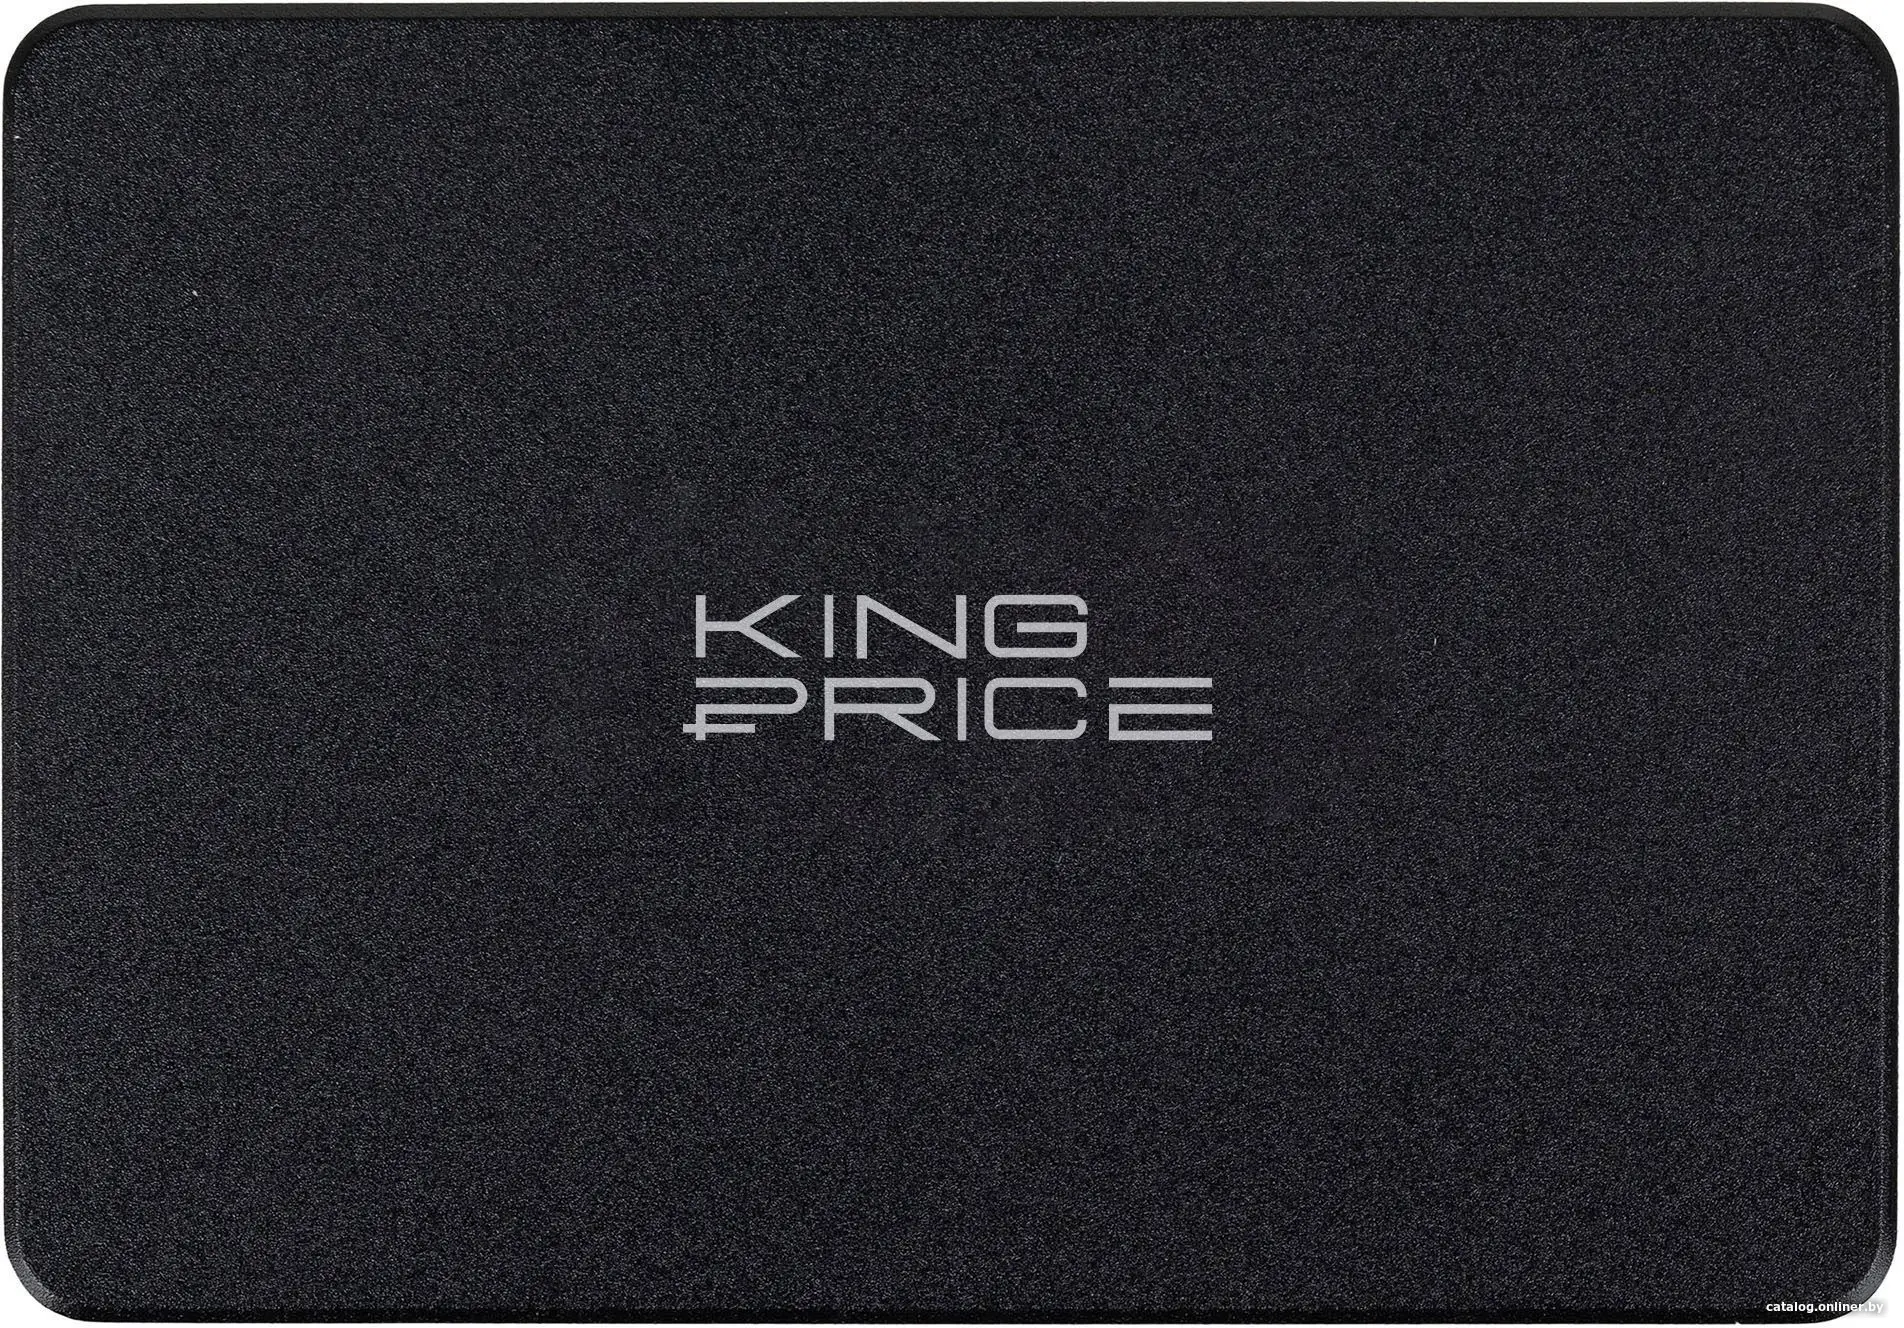 Купить SSD диск KingPrice SATA III 480GB KPSS480G2 2.5, цена, опт и розница